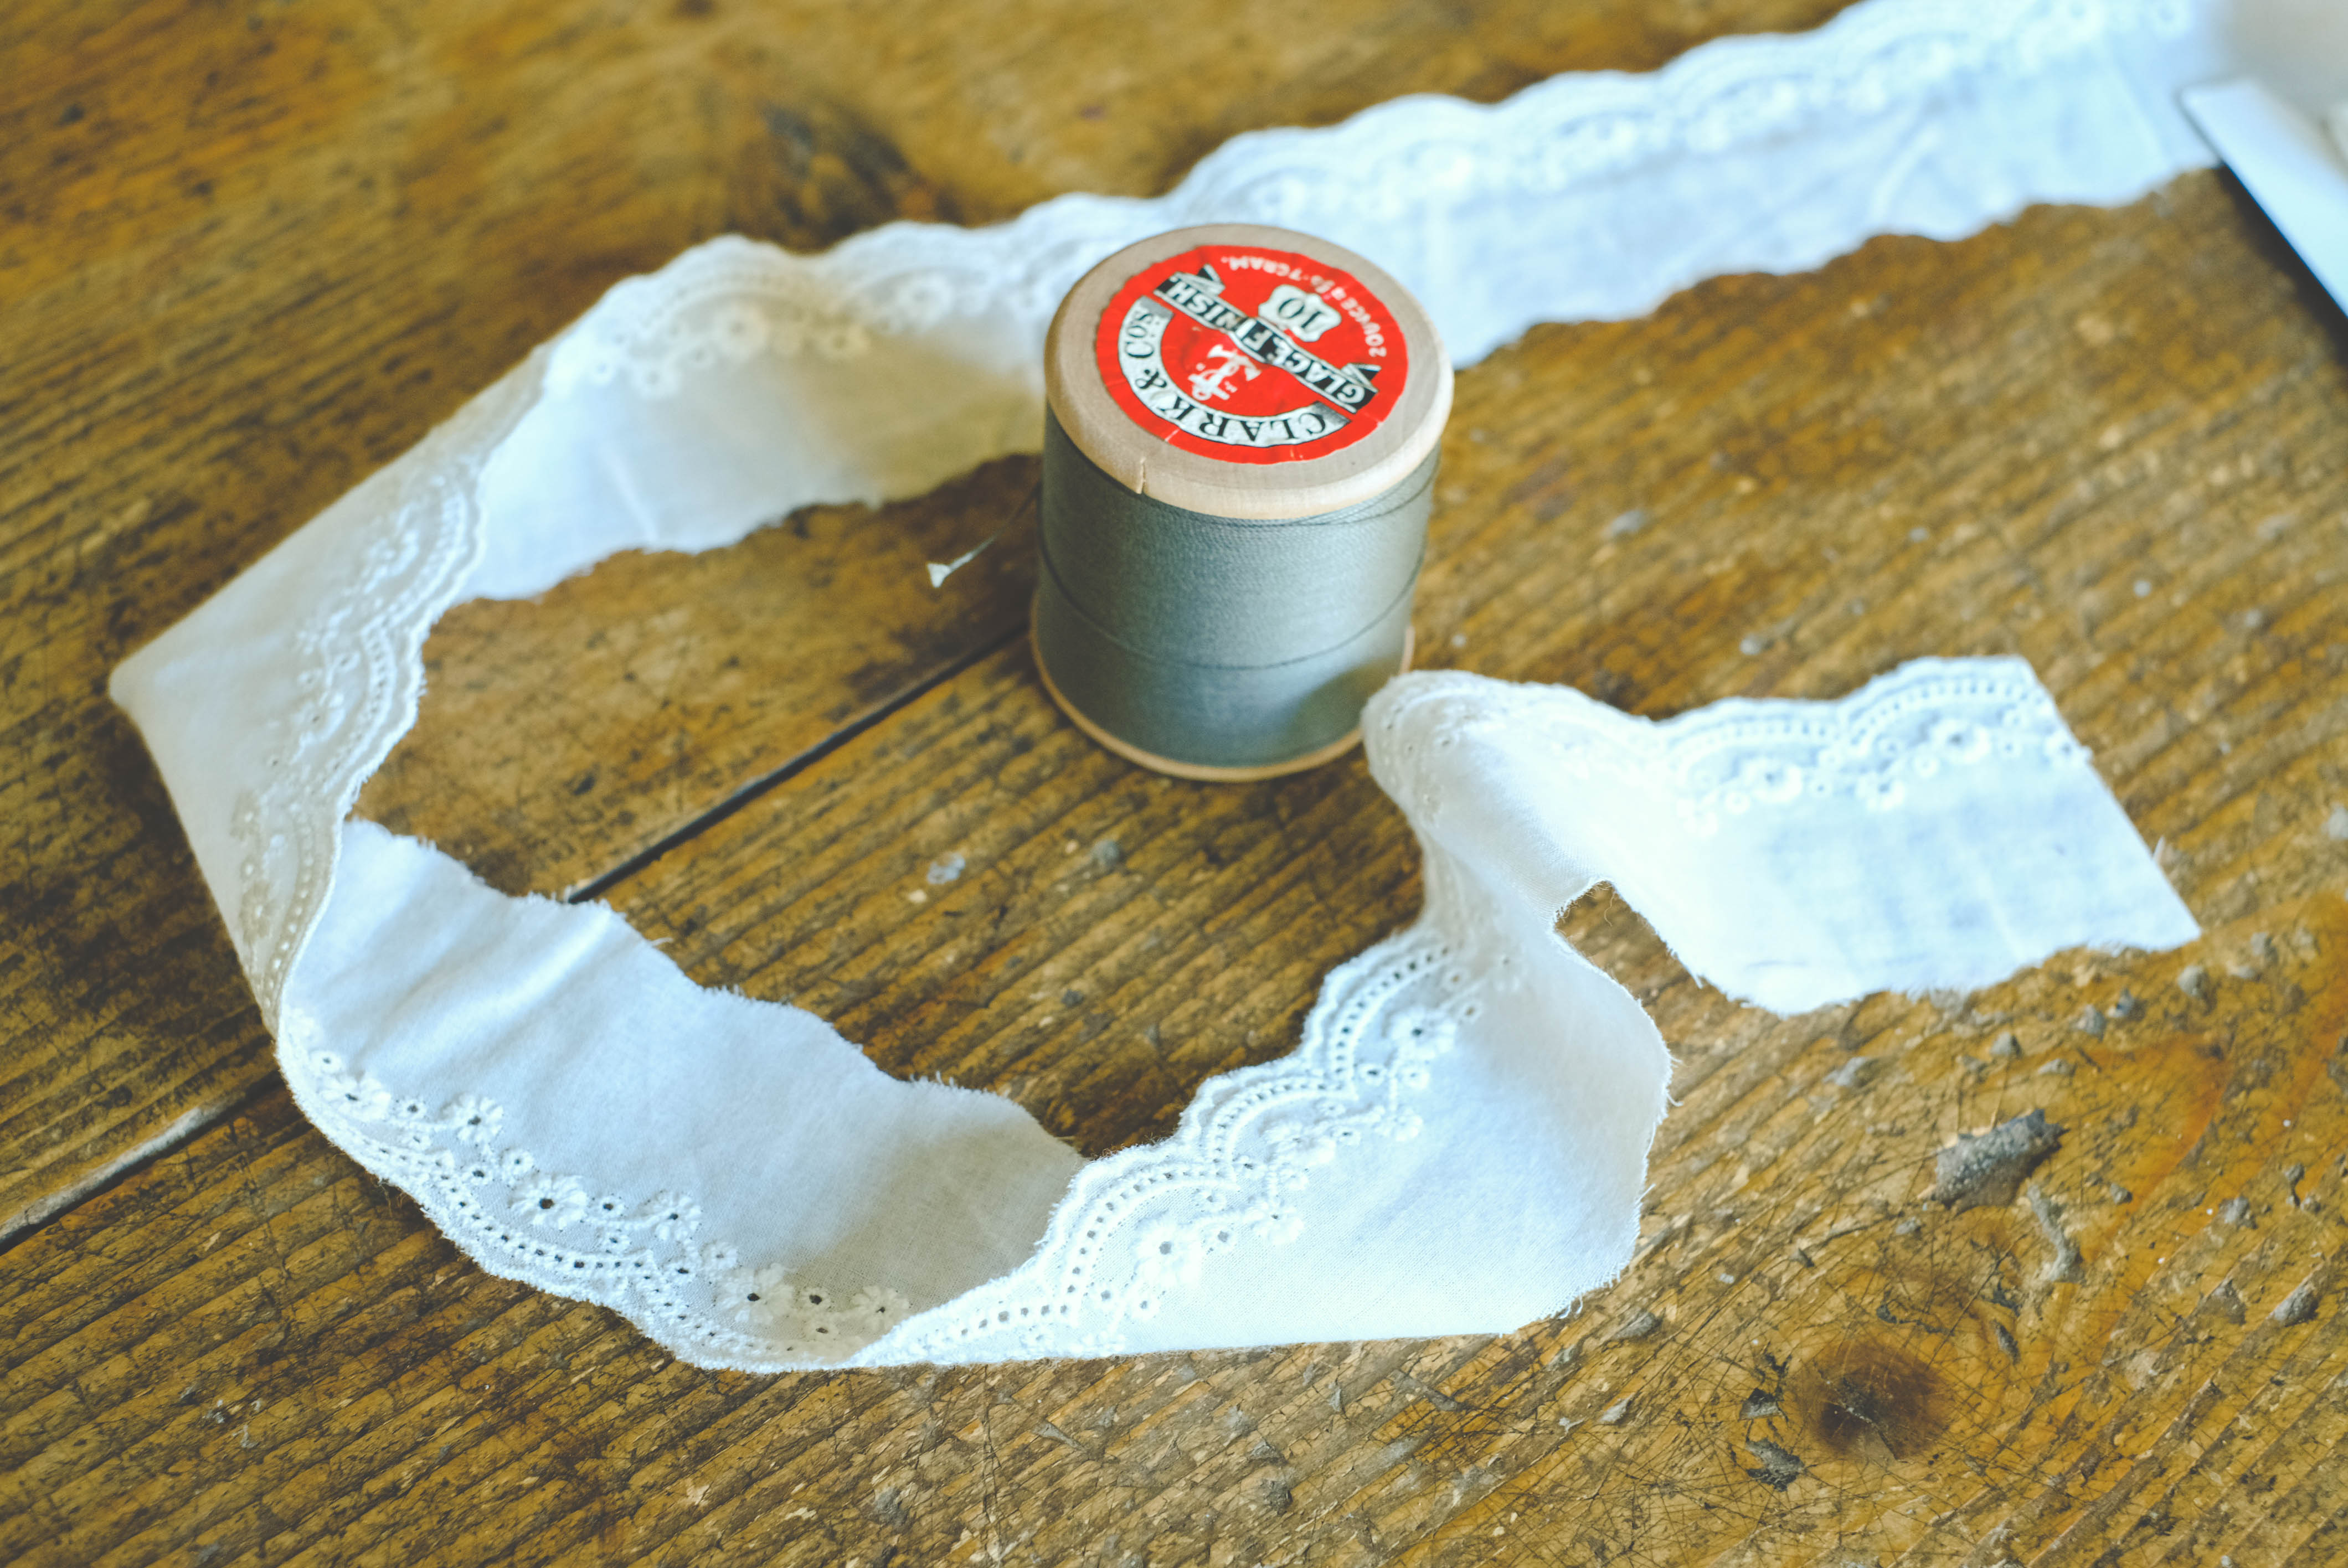 Embroidered cotton lace 5cm- white